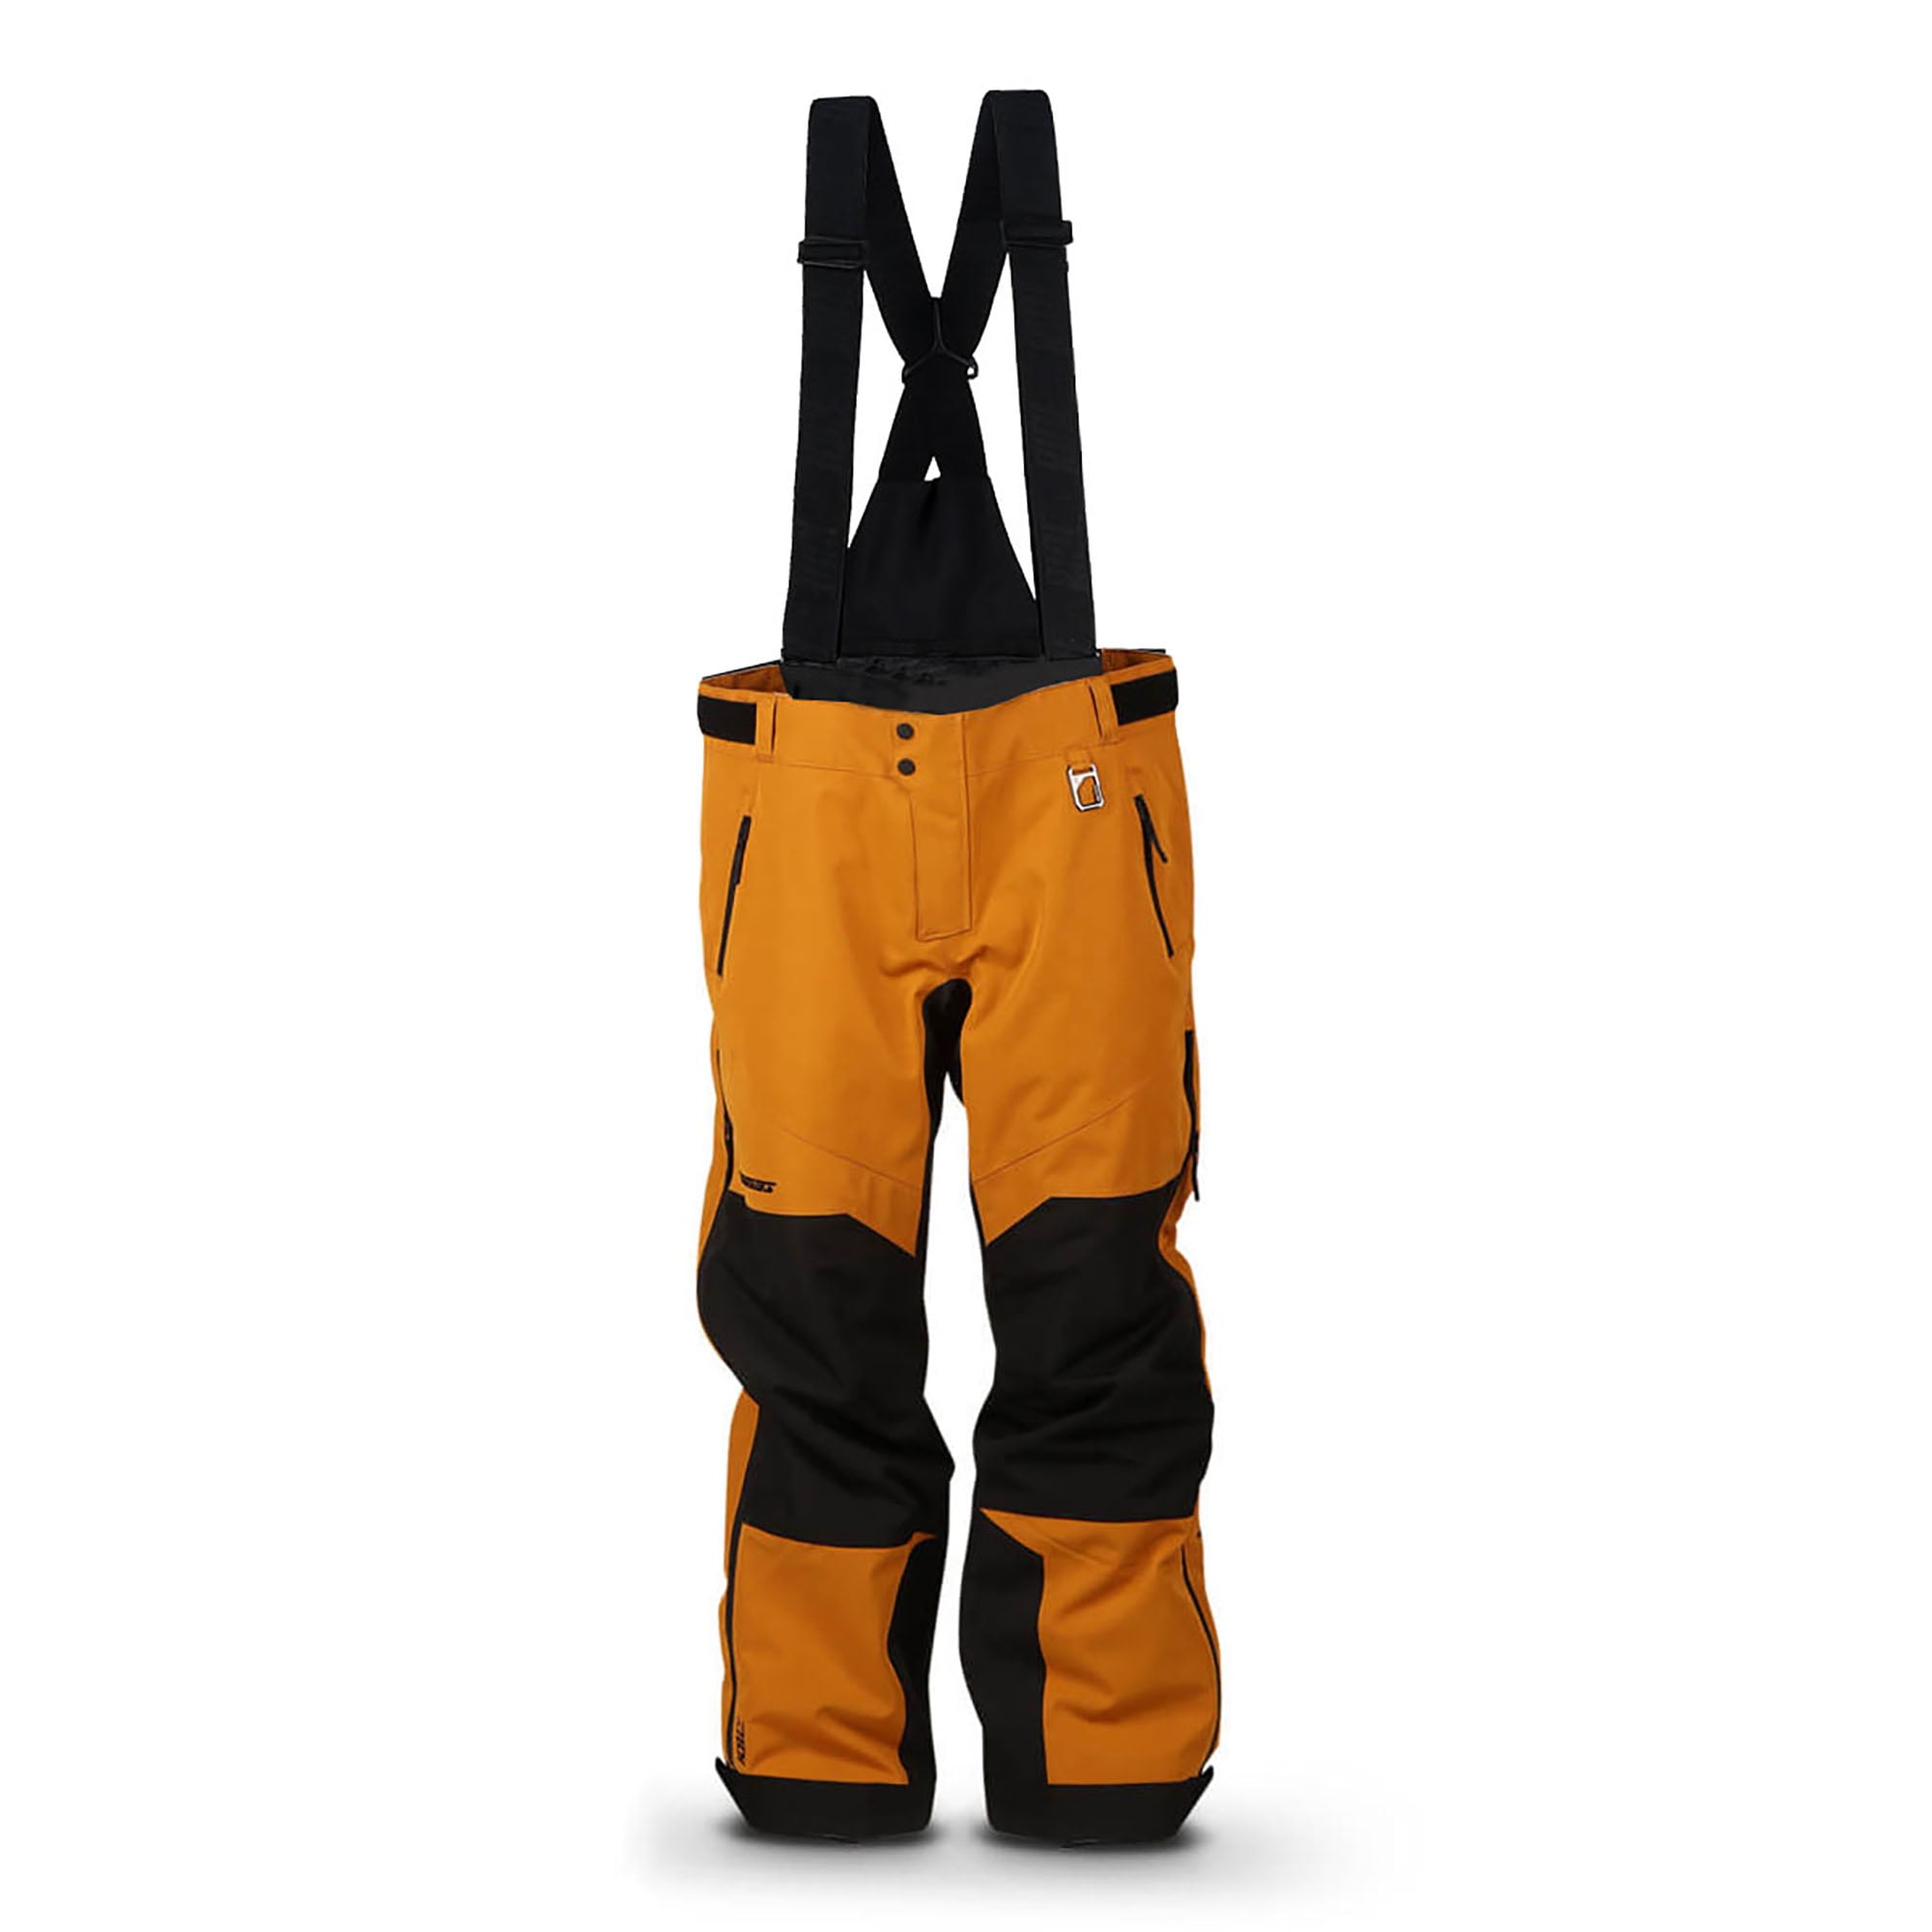 Spyder Mens Large ski snowboard insulated pants bibs, Retail $200